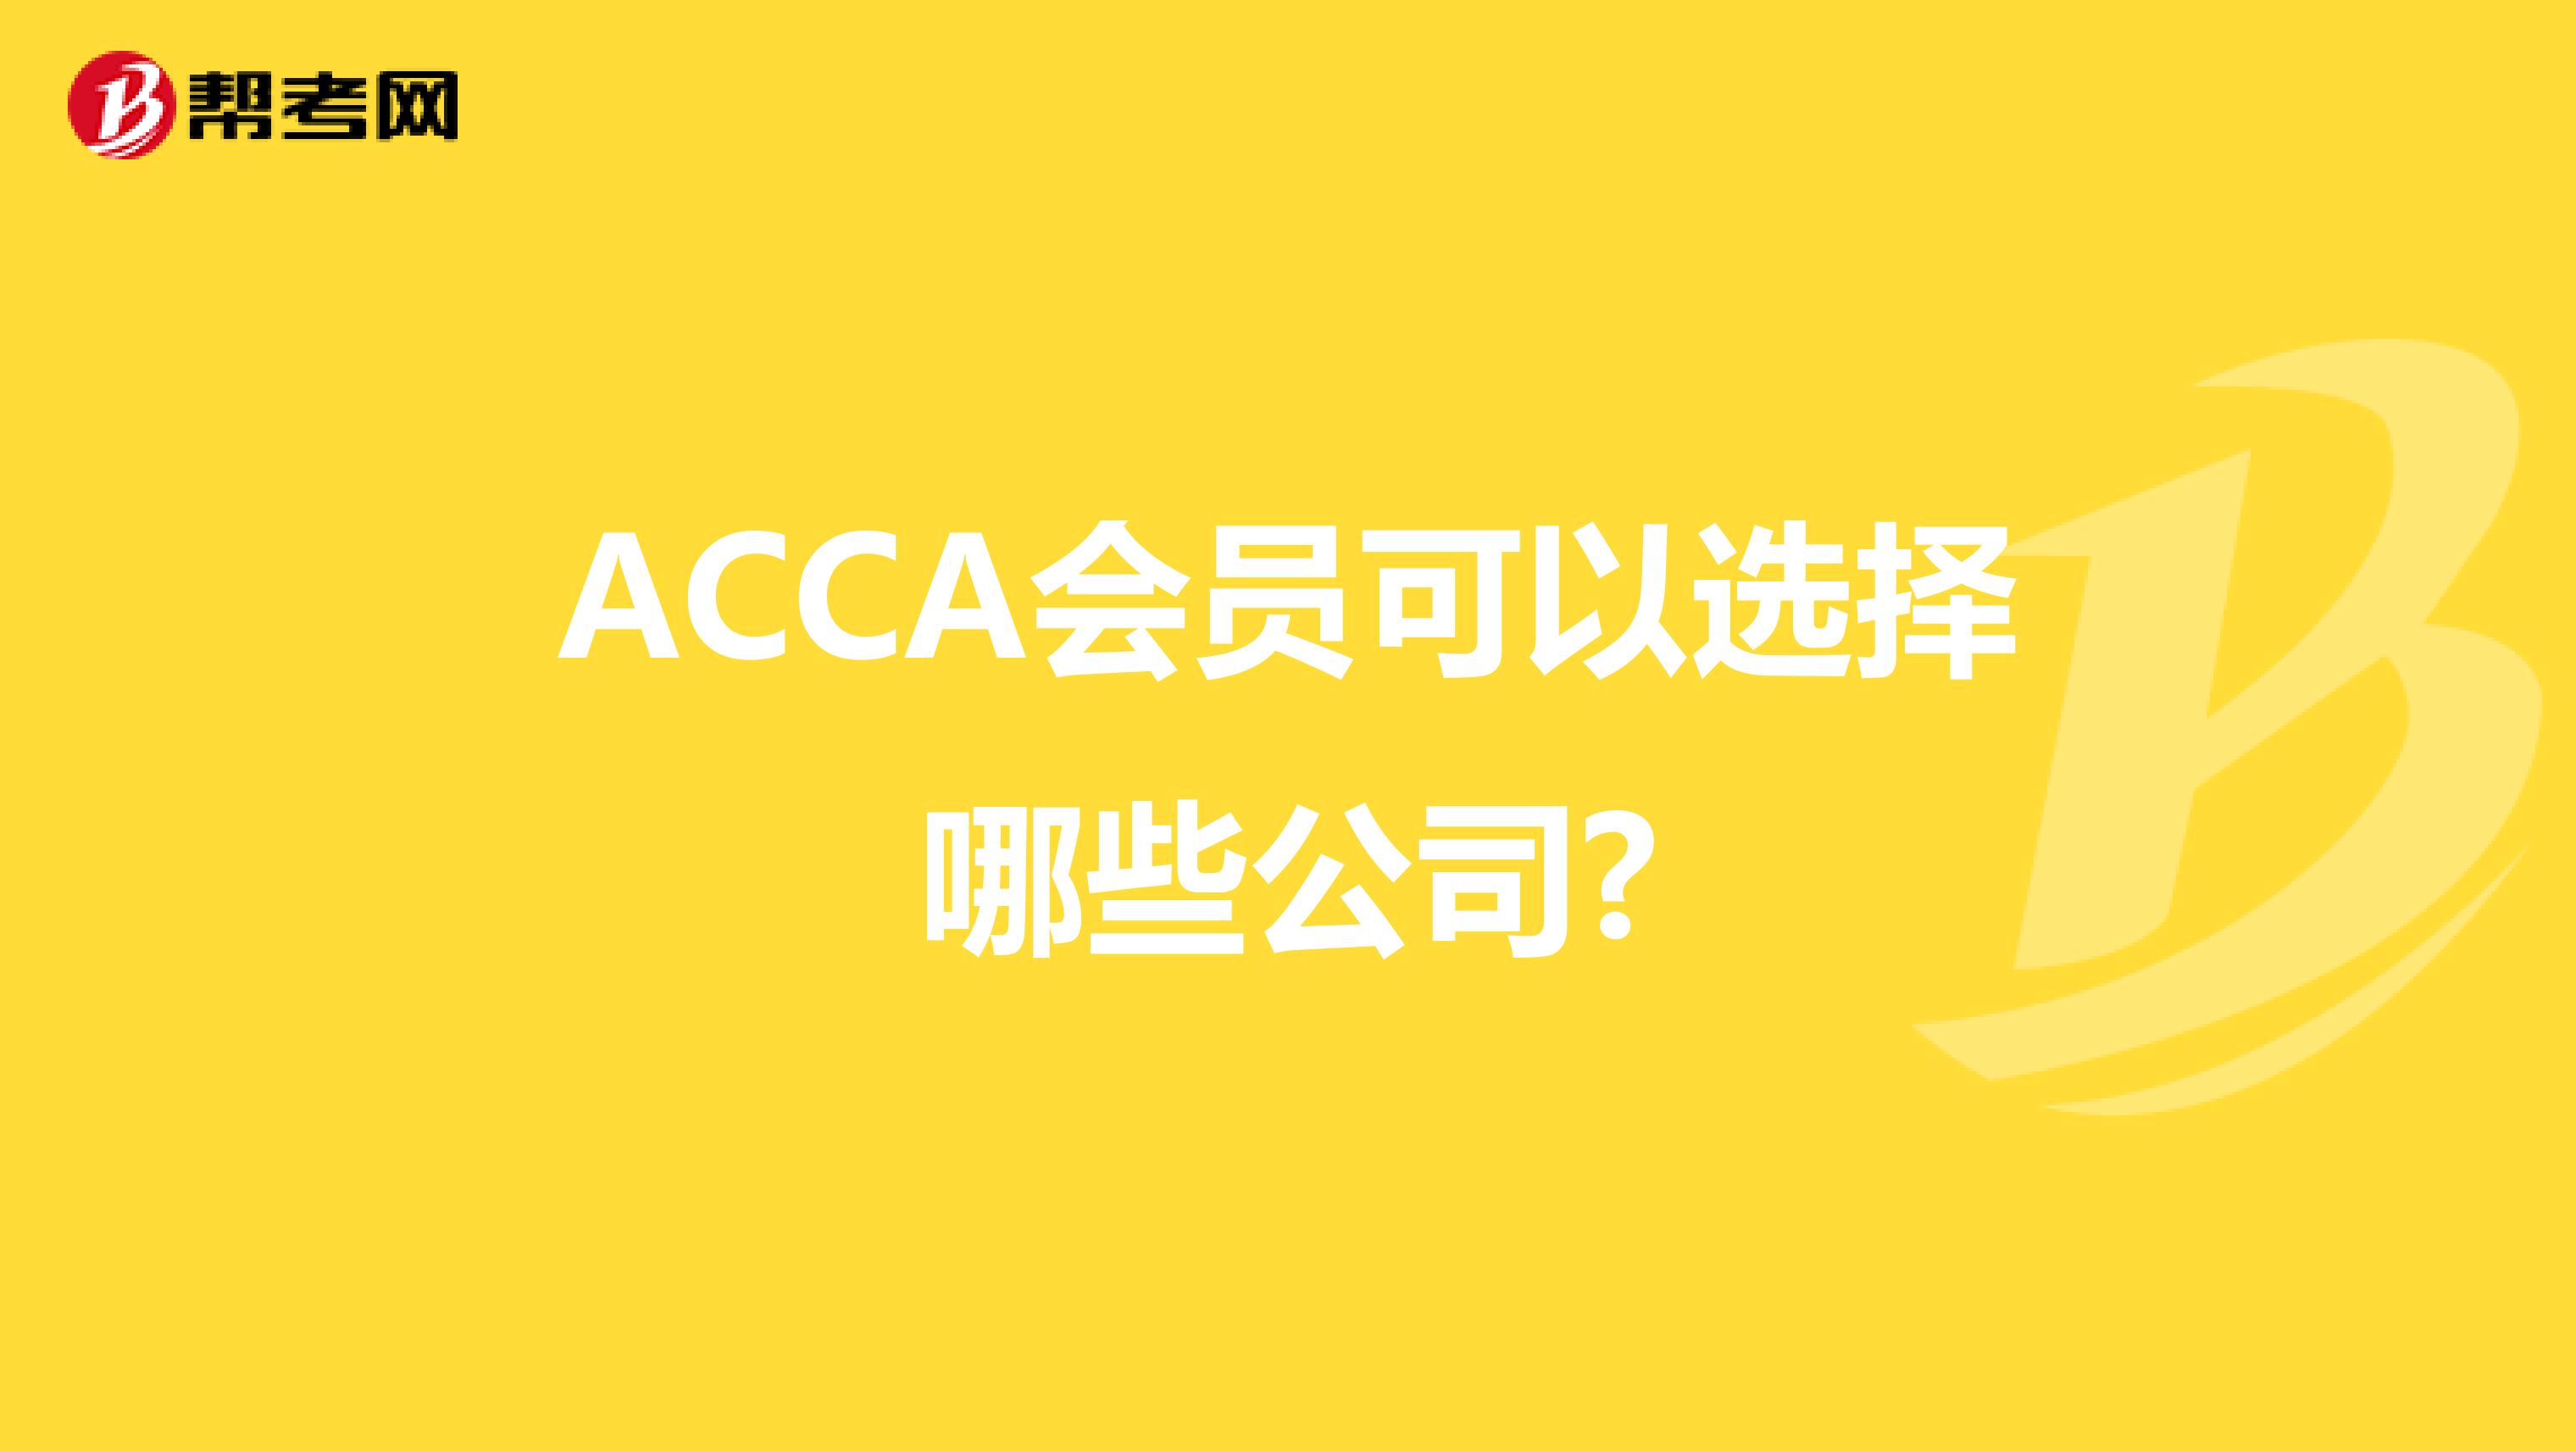 ACCA会员可以选择哪些公司?